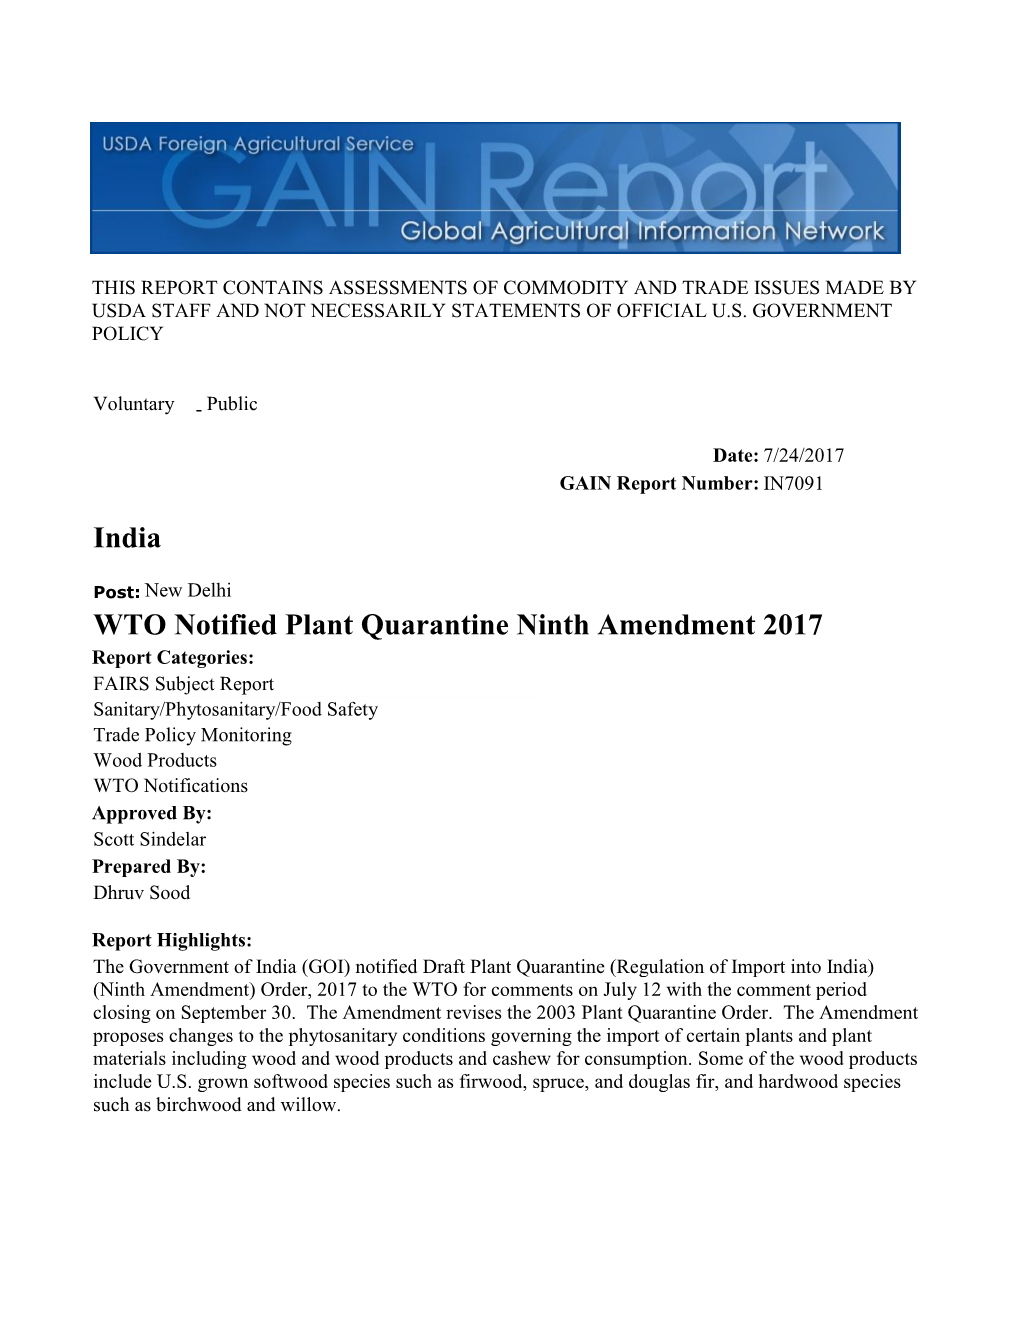 WTO Notified Plant Quarantine Ninth Amendment 2017 India